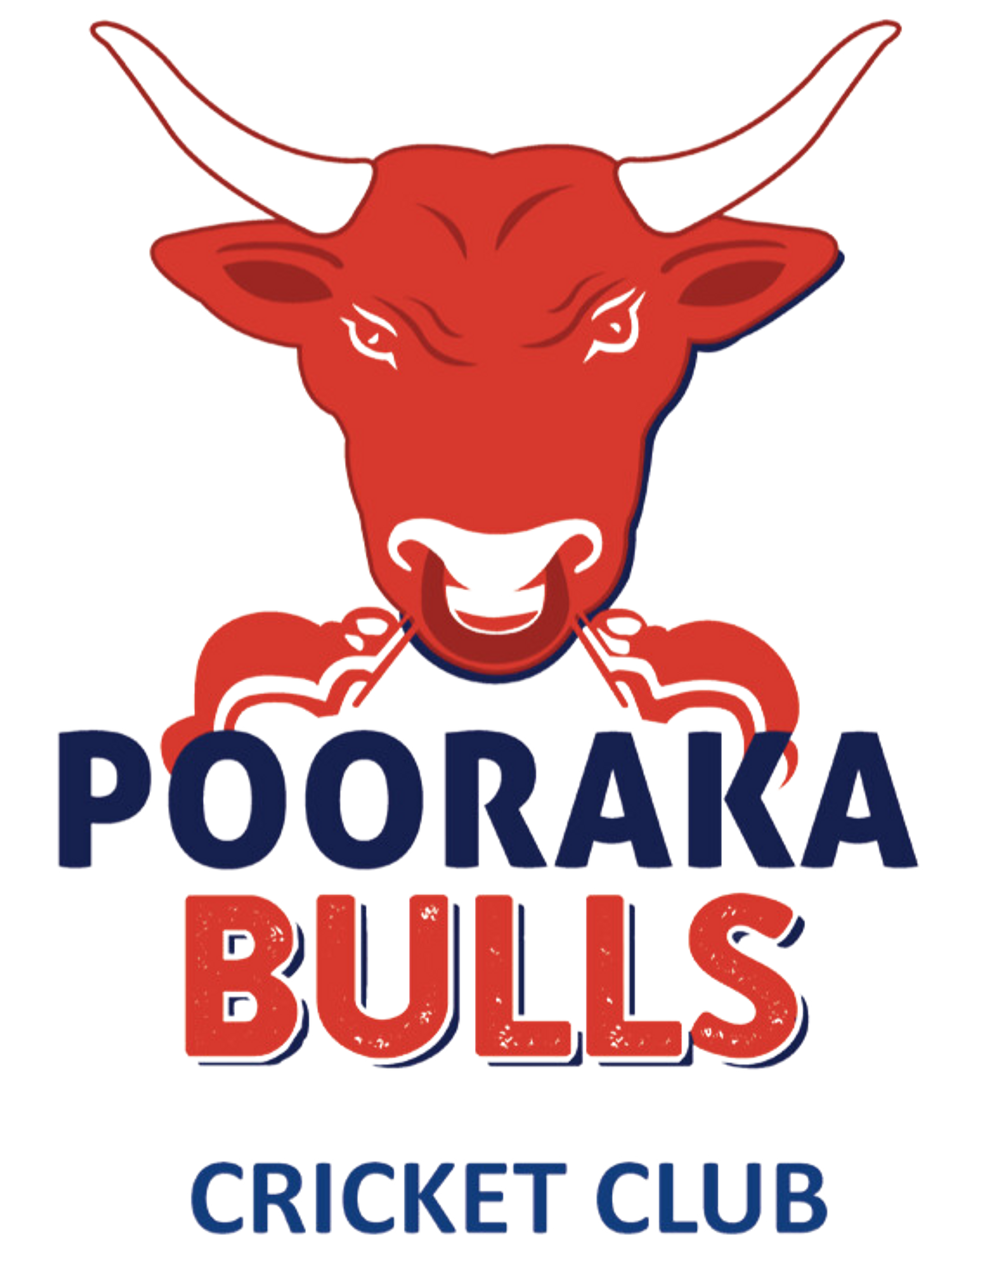 Pooraka Cricket Club